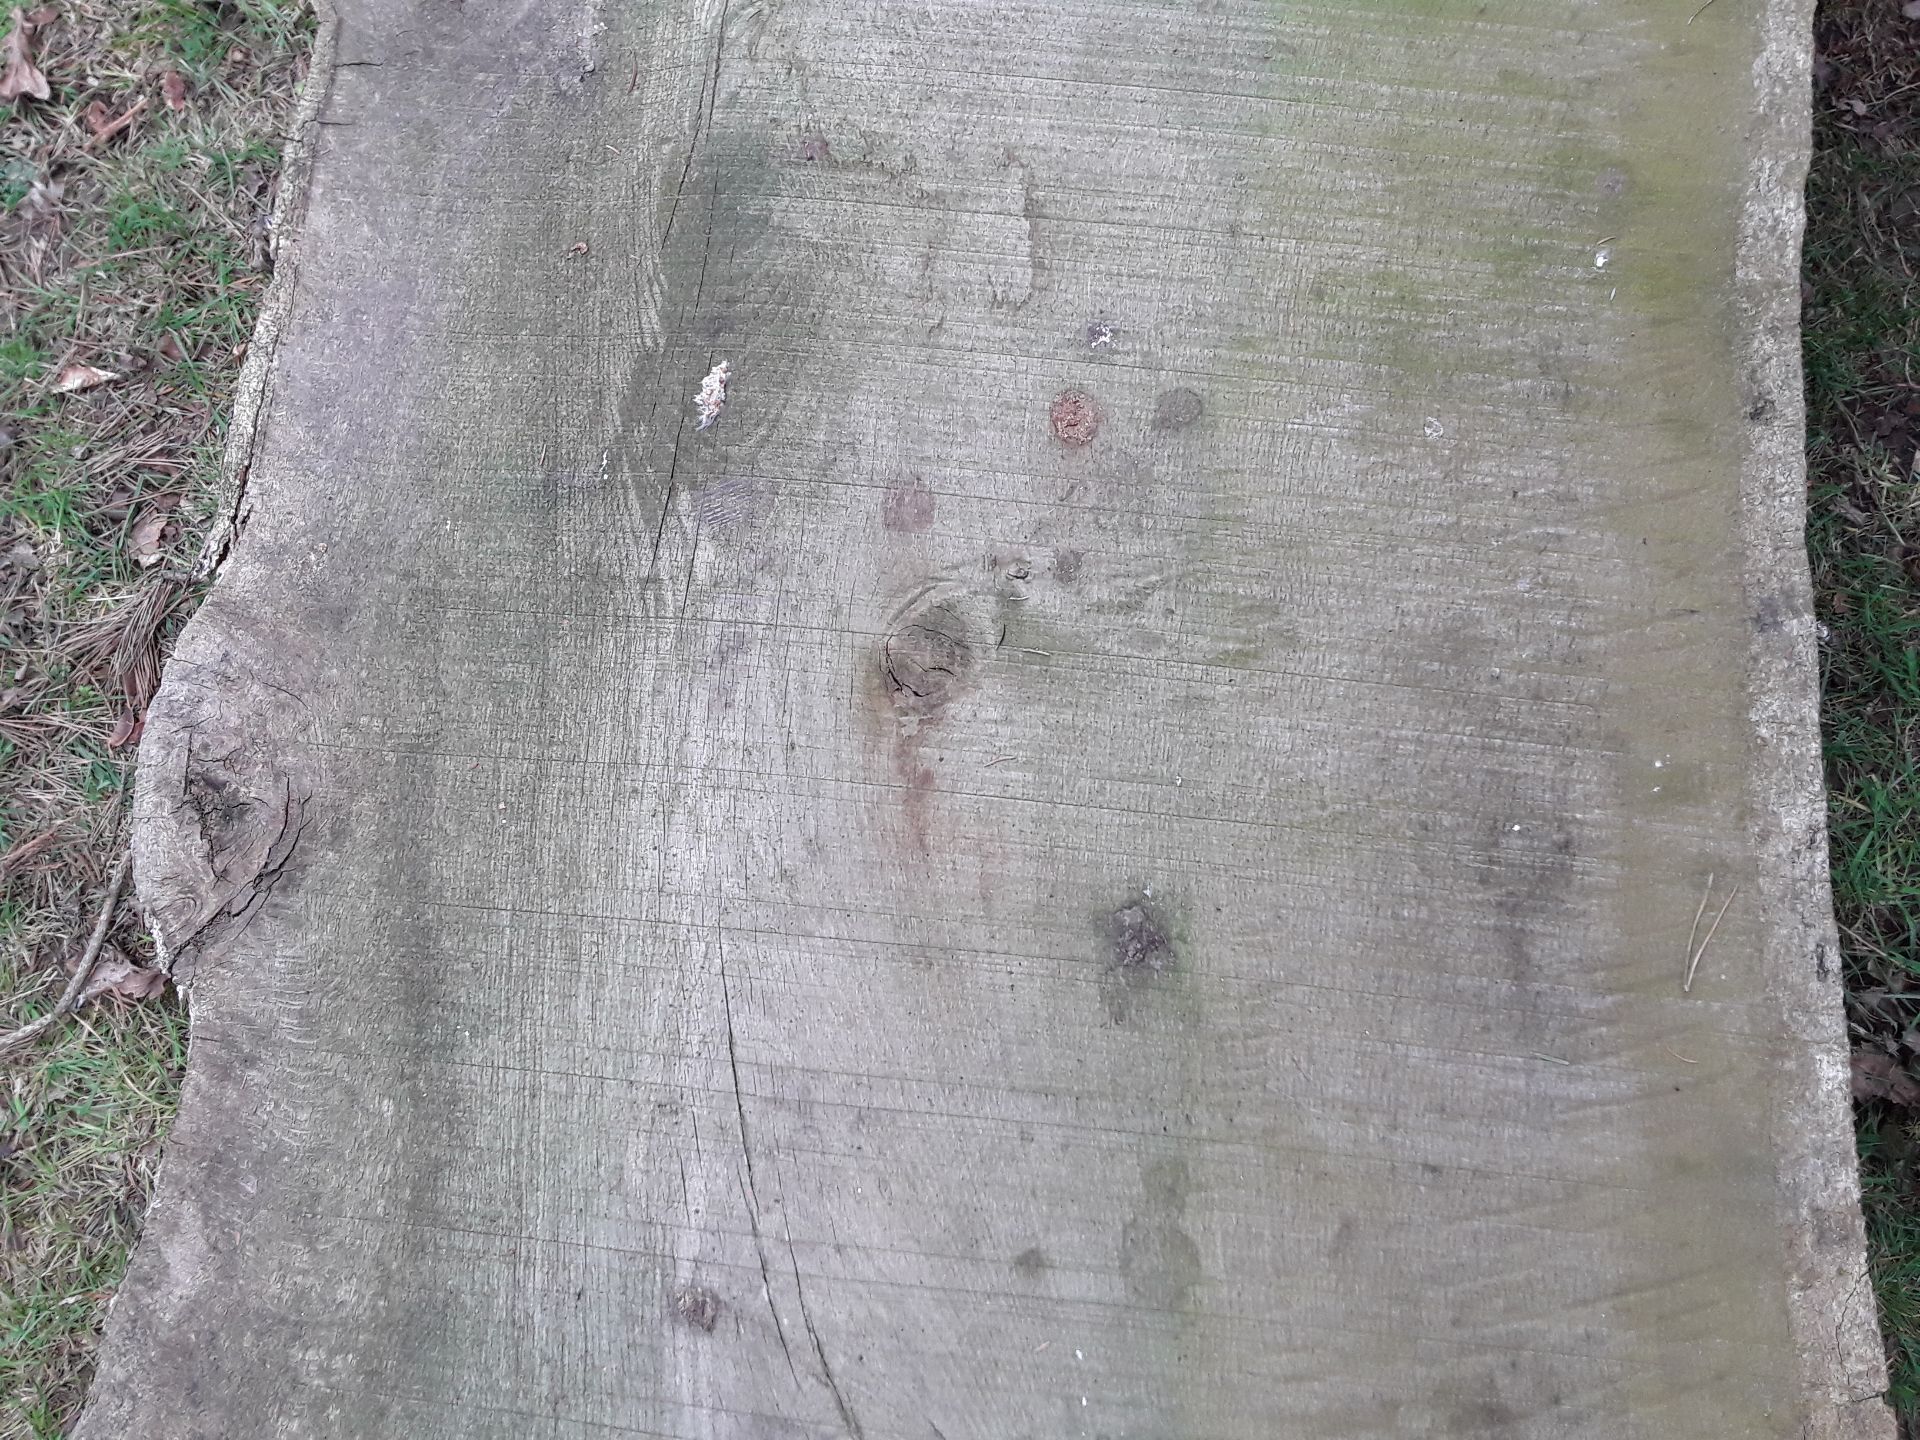 1 x Hardwood Timber Waney Edge / Live Edge Air Dried Sawn English Oak Slab / Table Top - Image 4 of 4